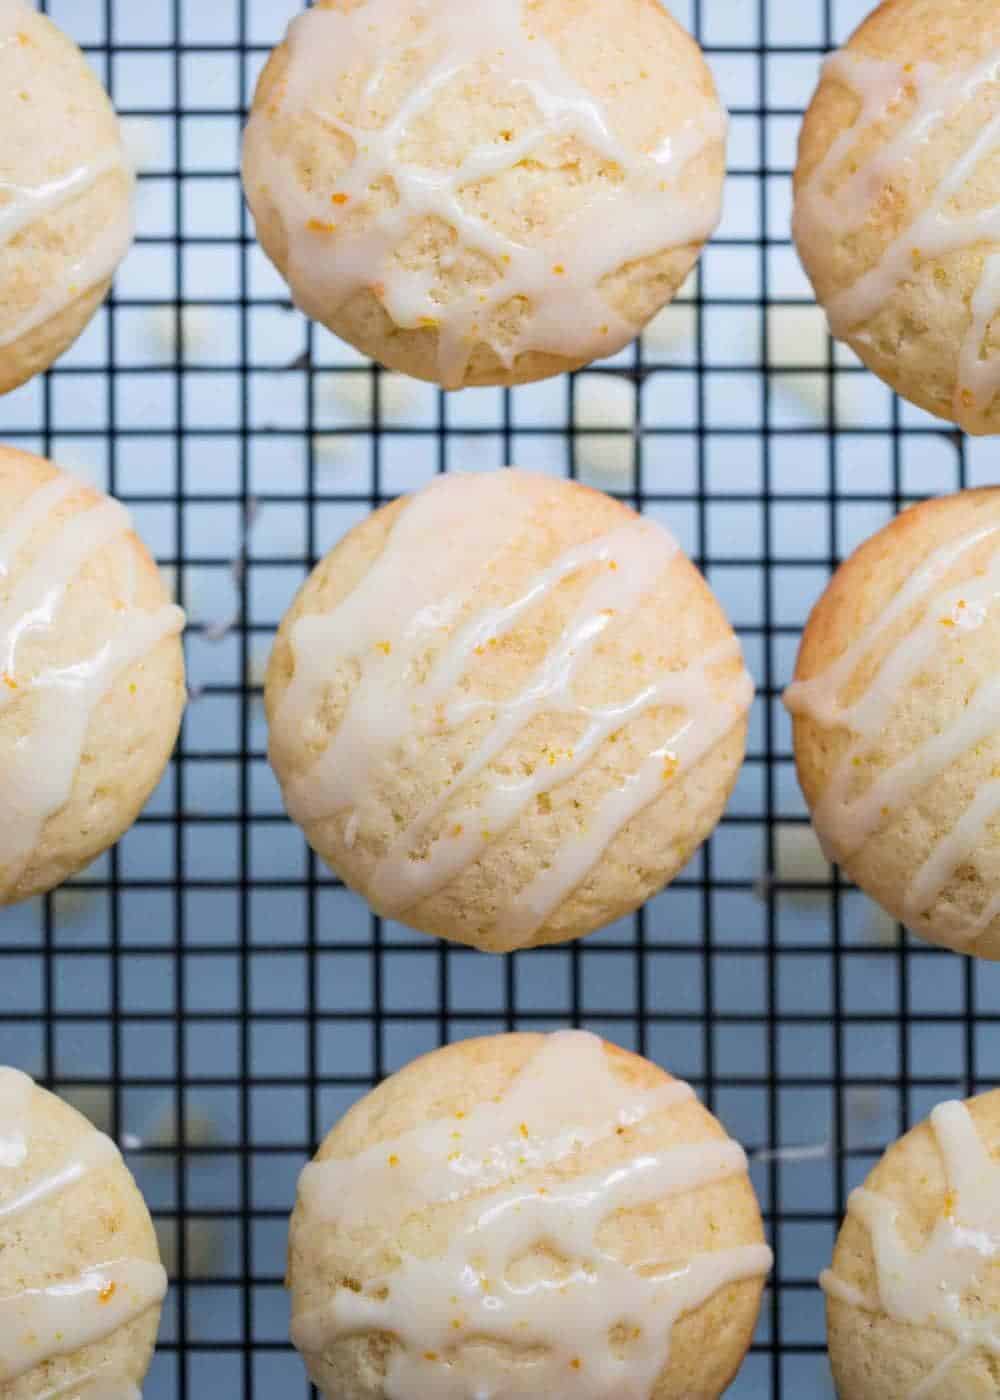 Glazed orange muffins on a baking rack.